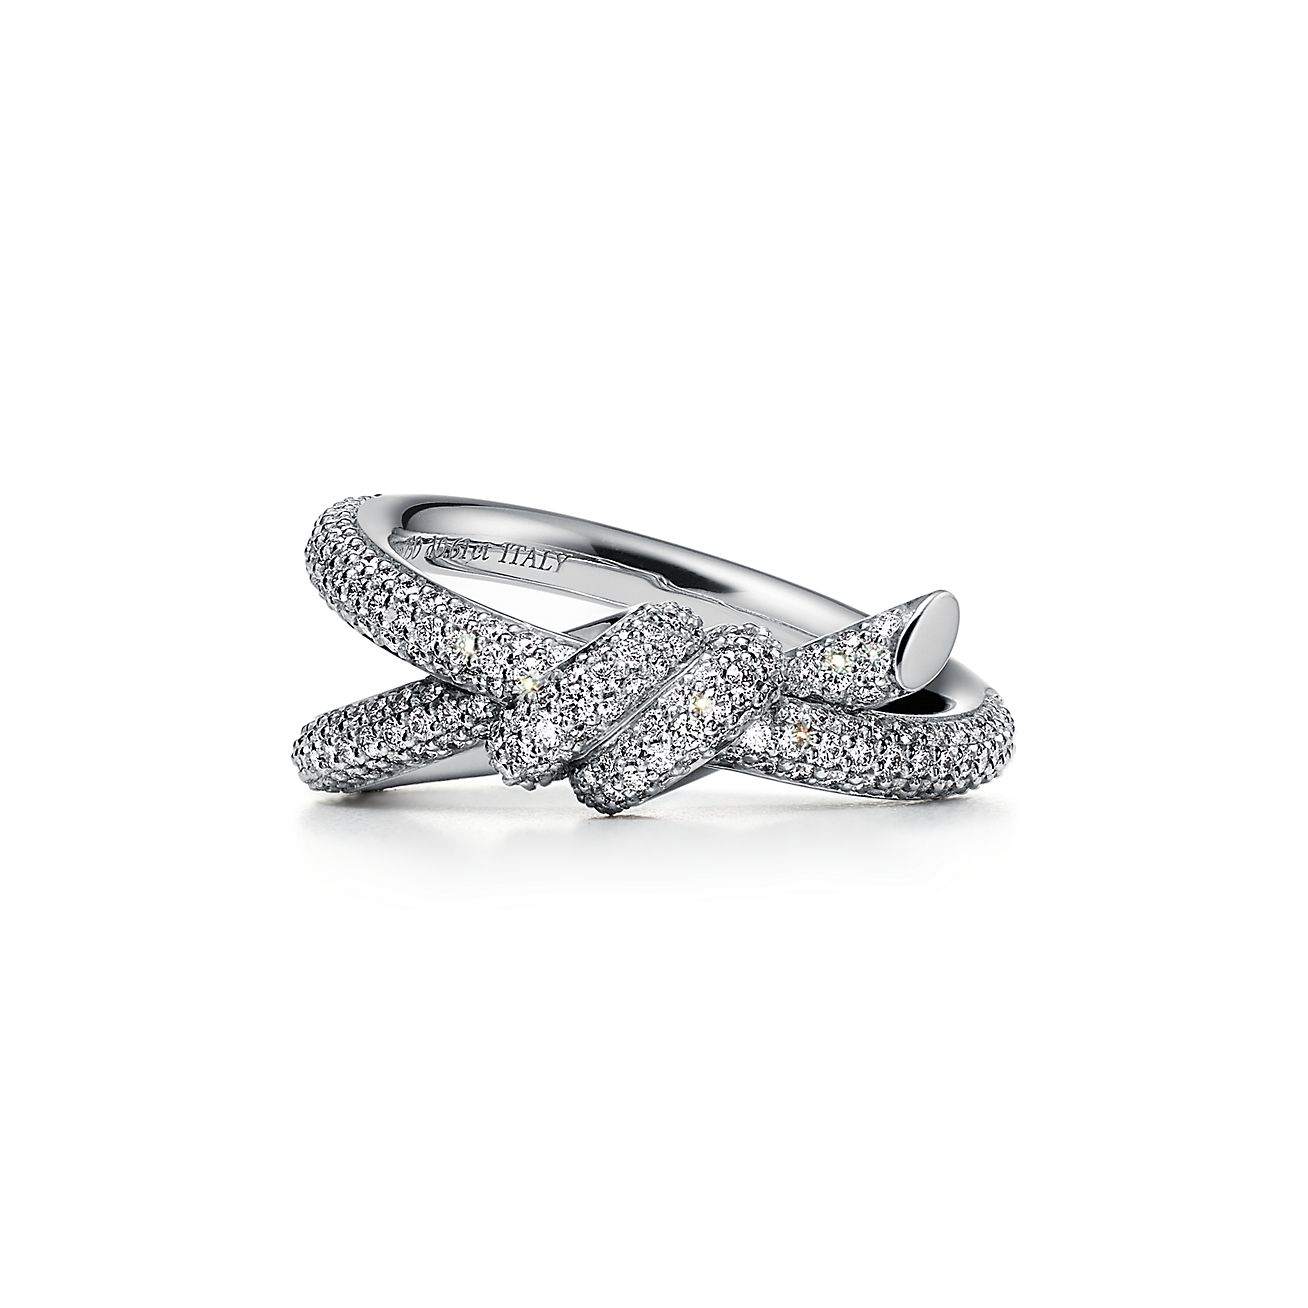 Bague double rang Tiffany Knot en or blanc 18 carats et diamants - Size 7 Tiffany & Co.